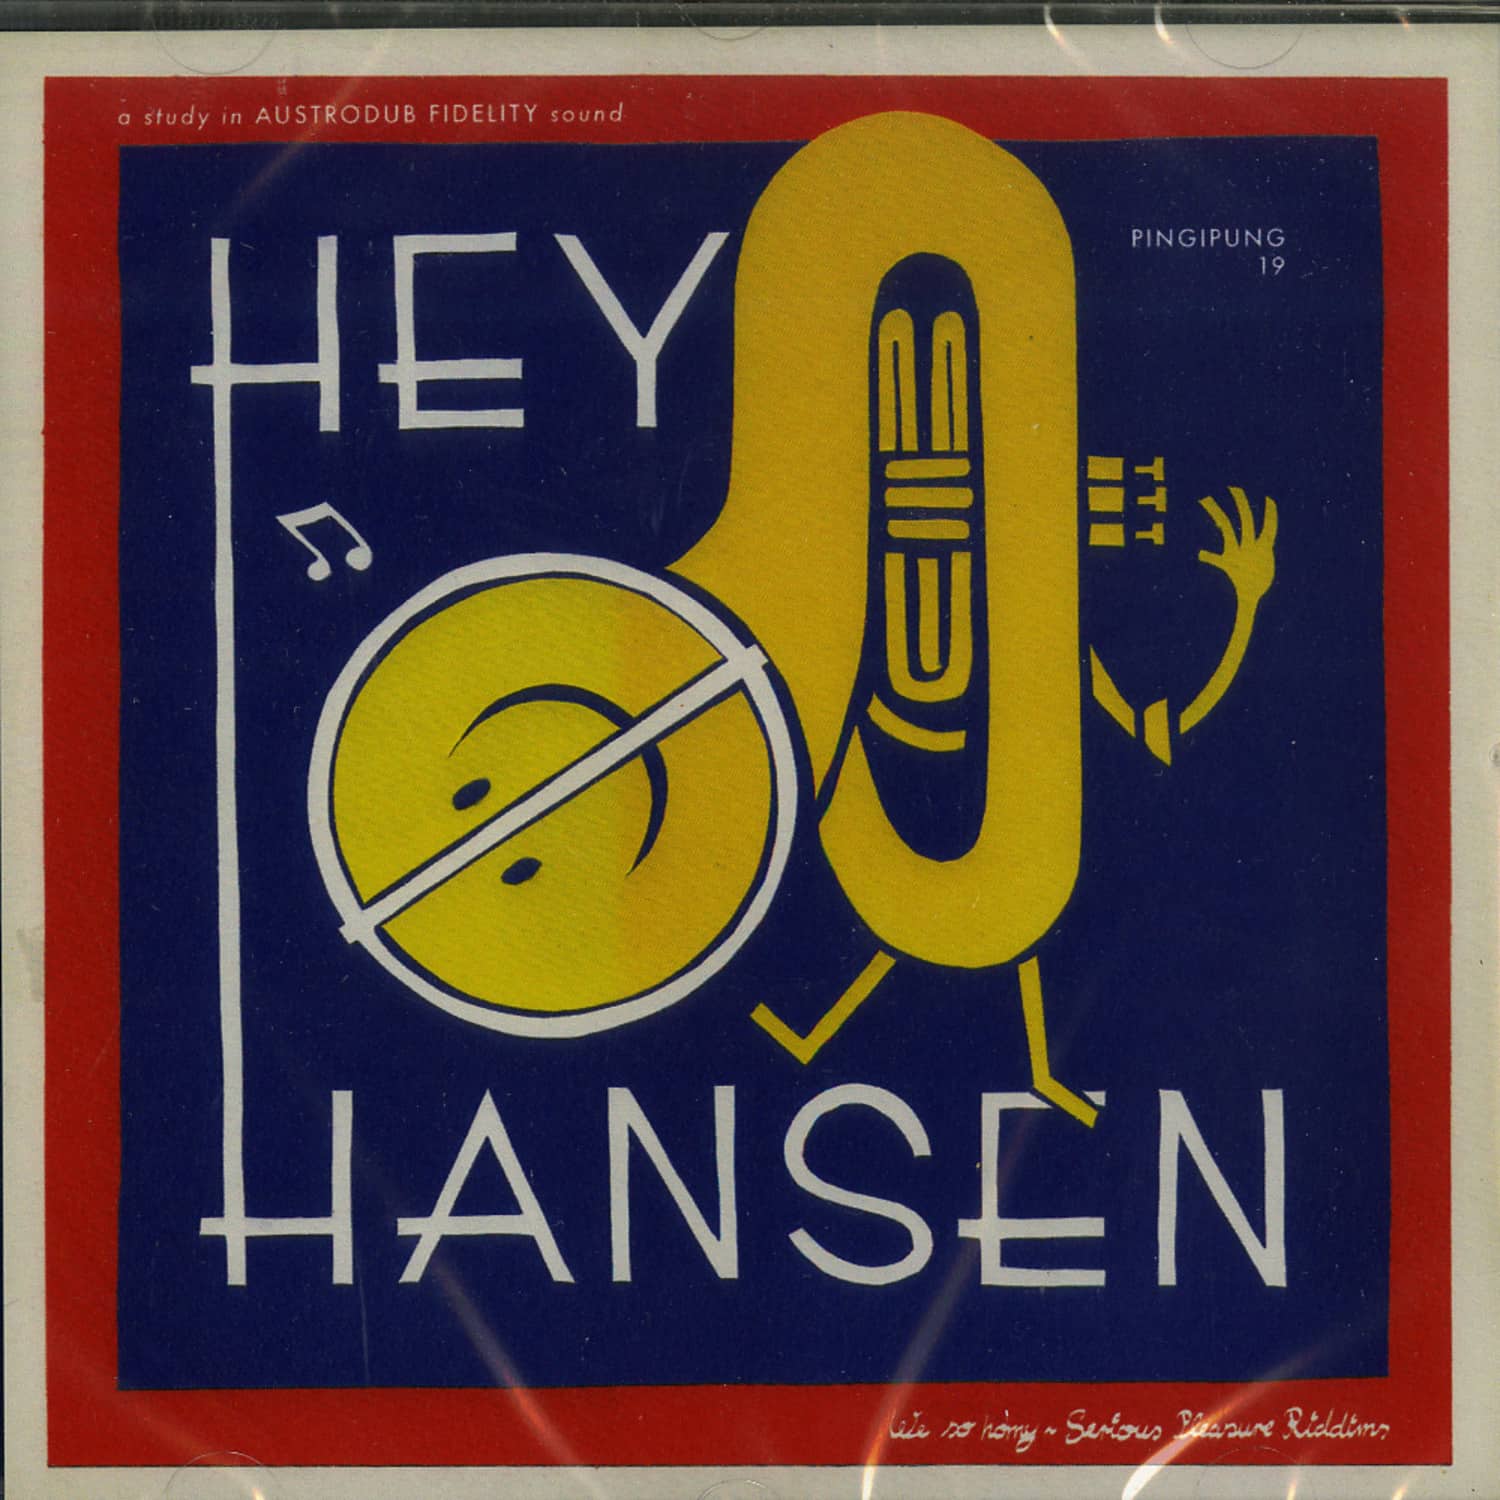 Hey-o-Hansen - WE SO HORNY - SERIOUS PLEASURE RIDDIMS 